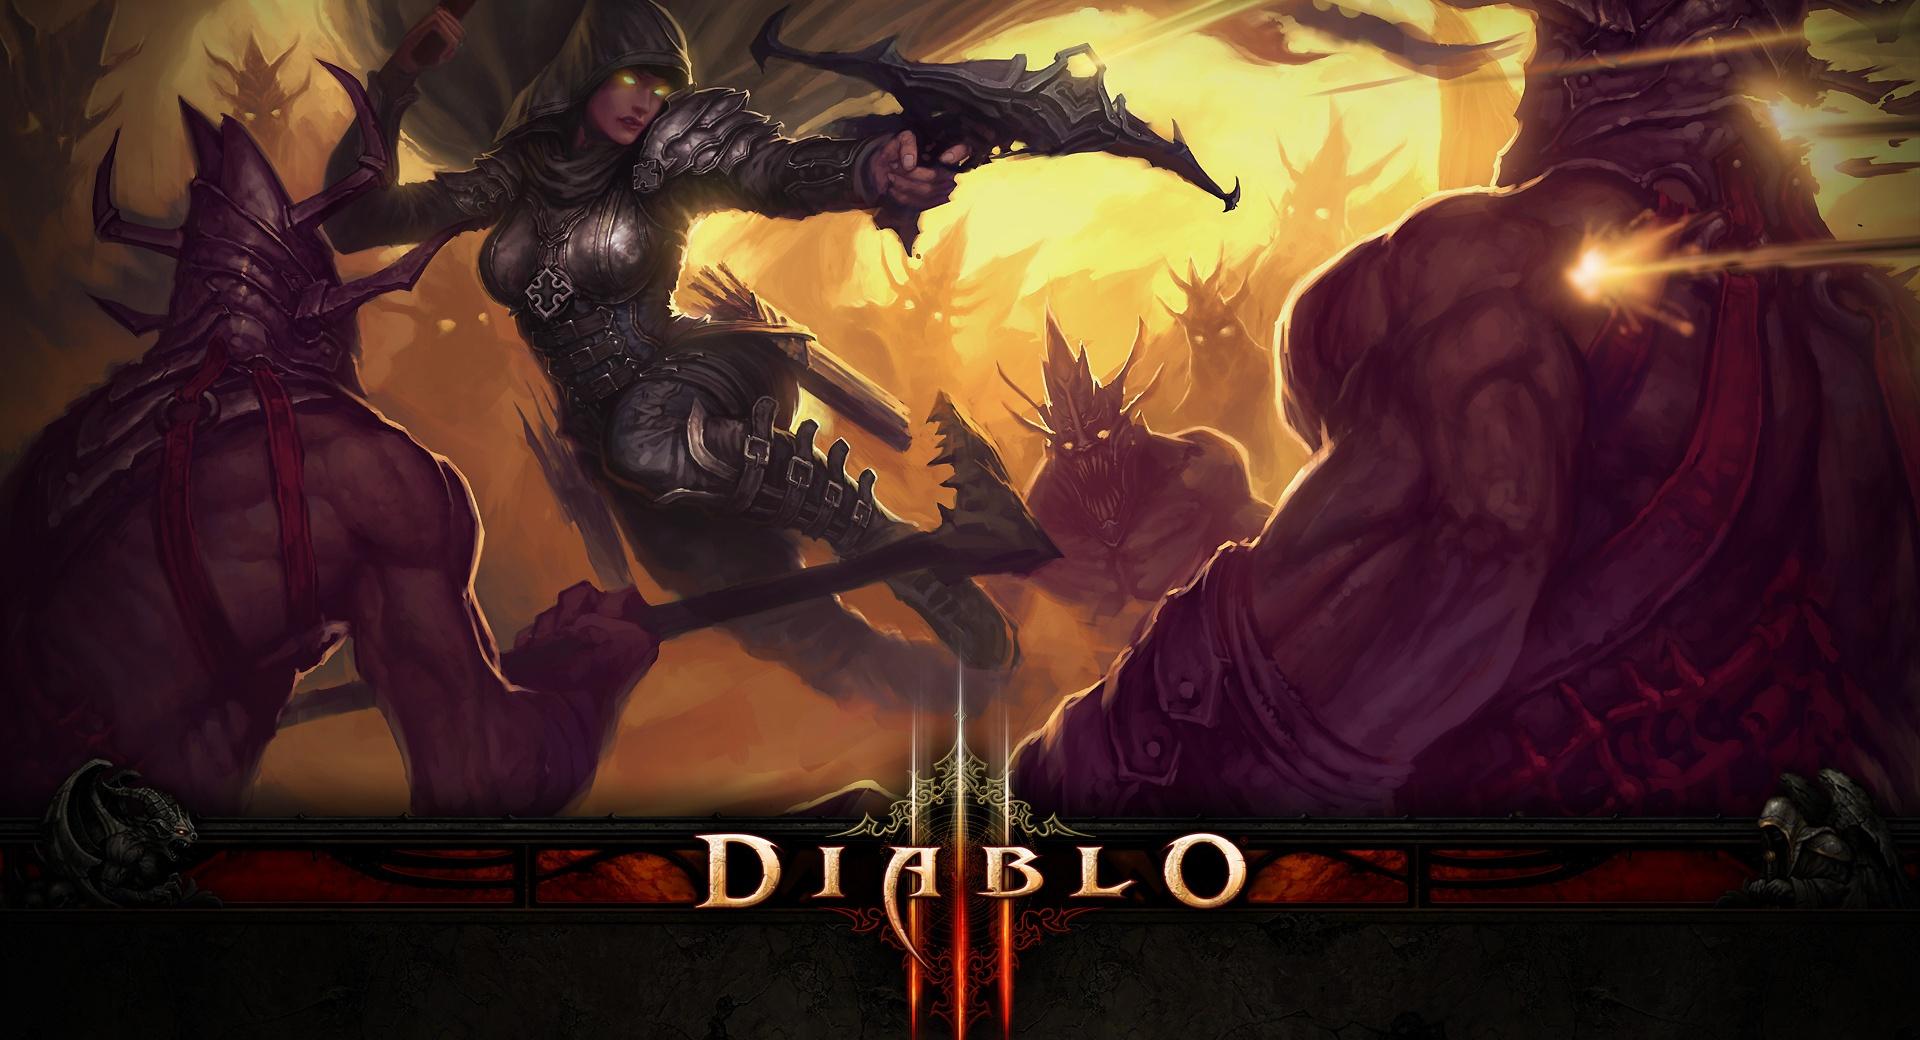 Diablo III Demon Hunter at 1024 x 1024 iPad size wallpapers HD quality